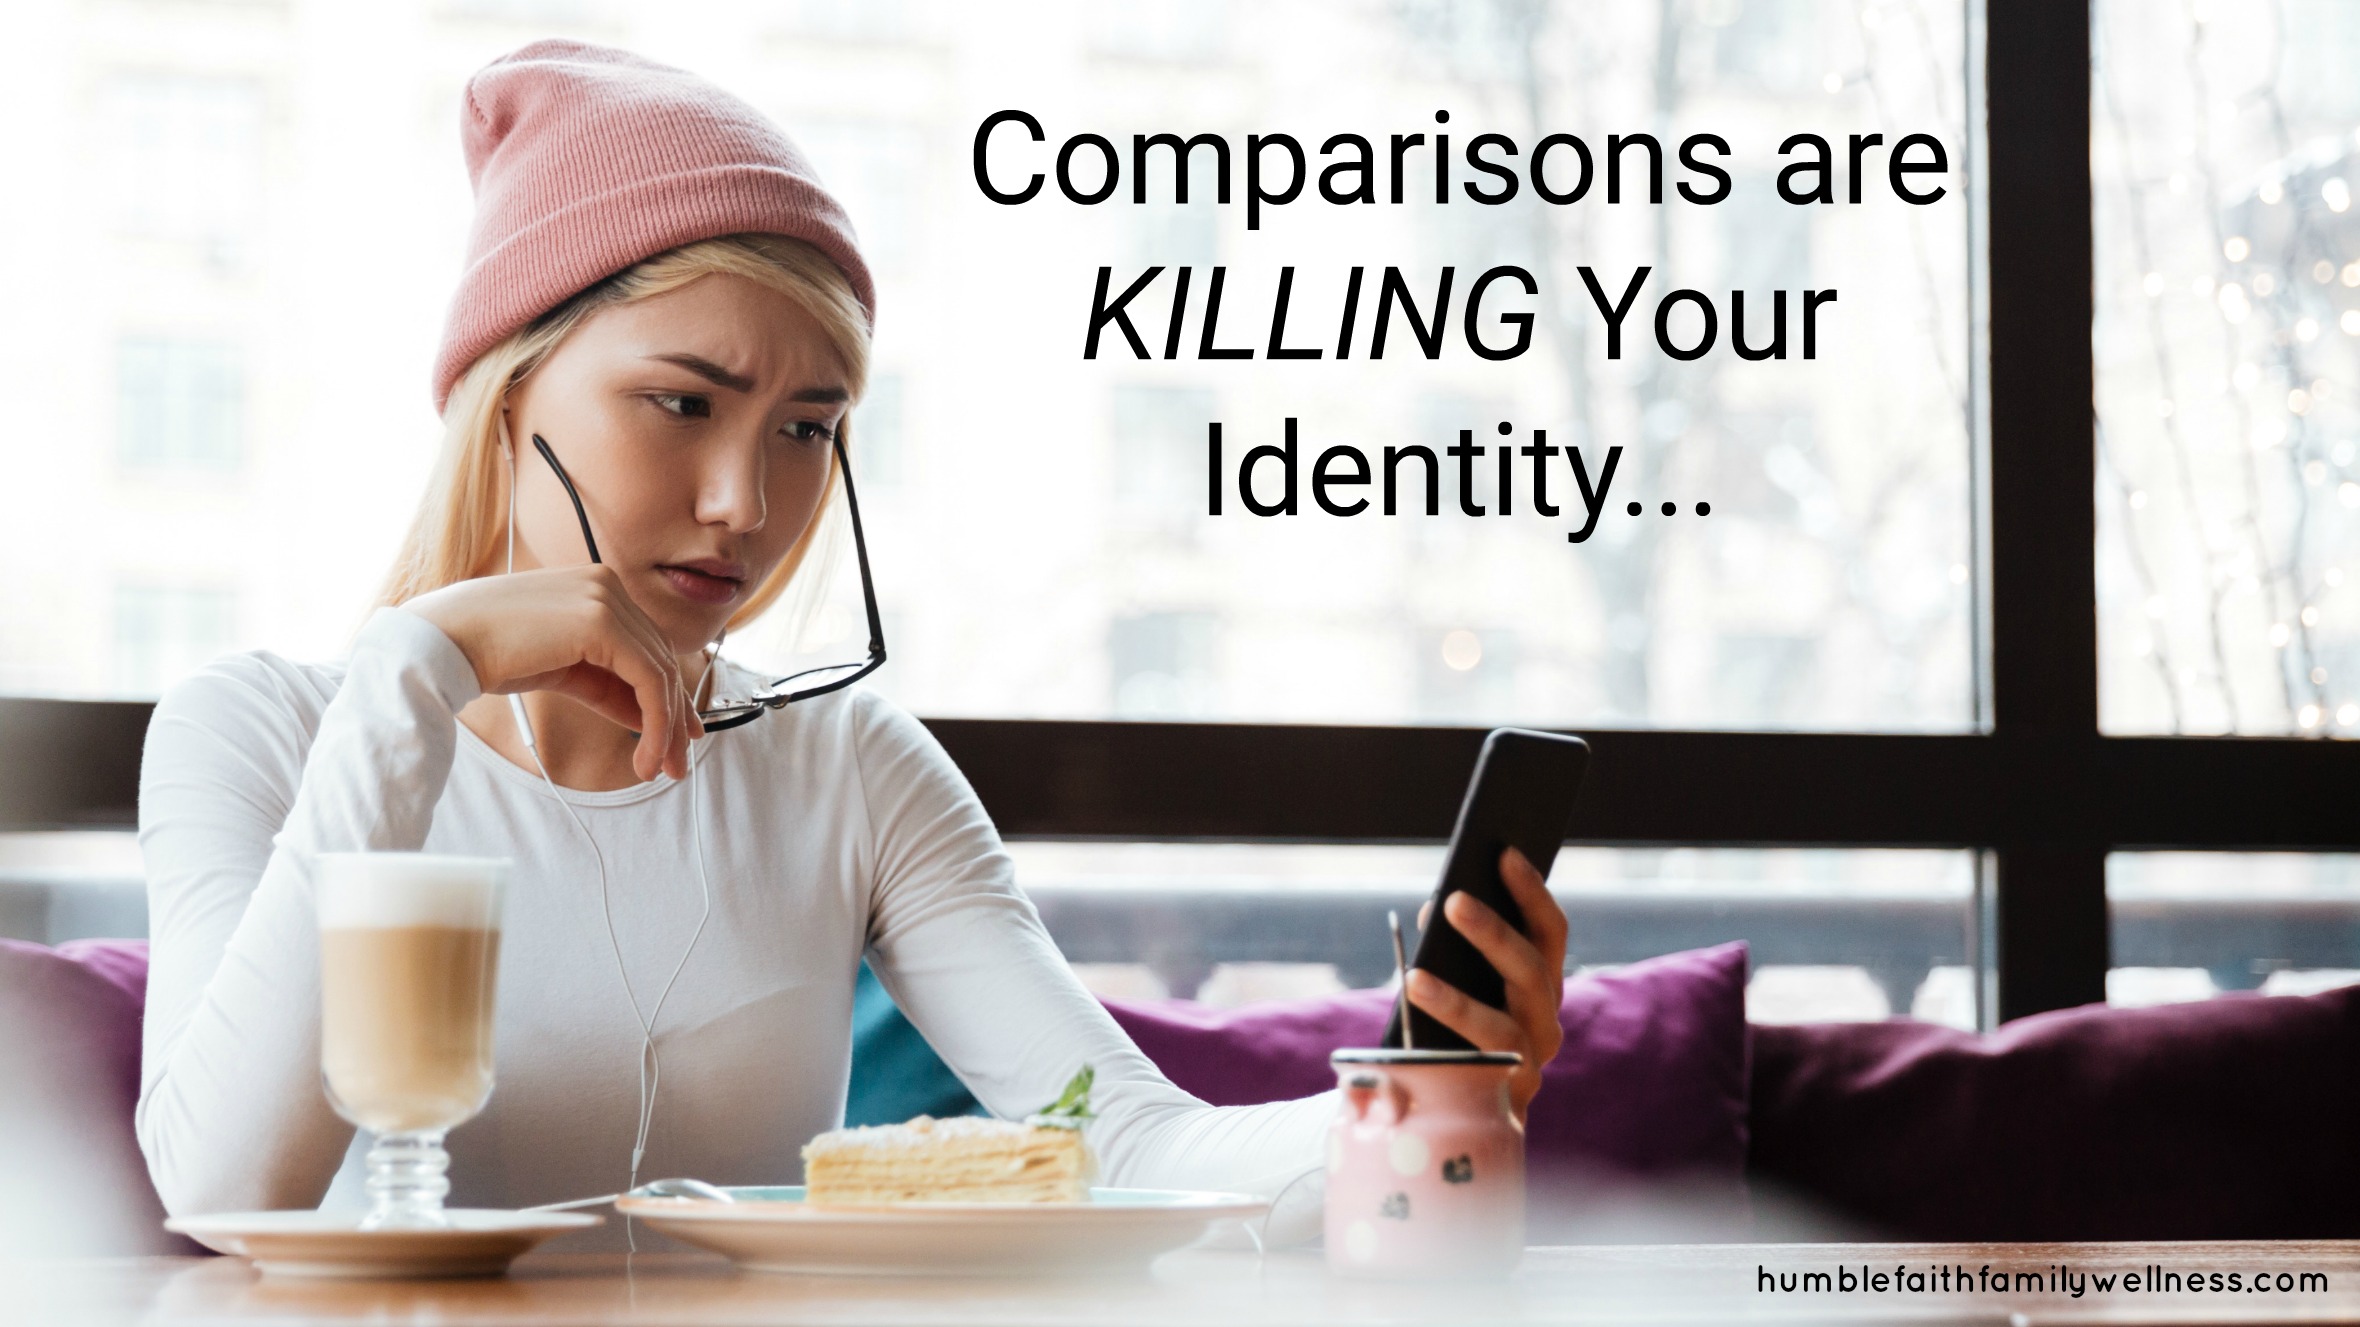 Comparisons are Killing Your Identity